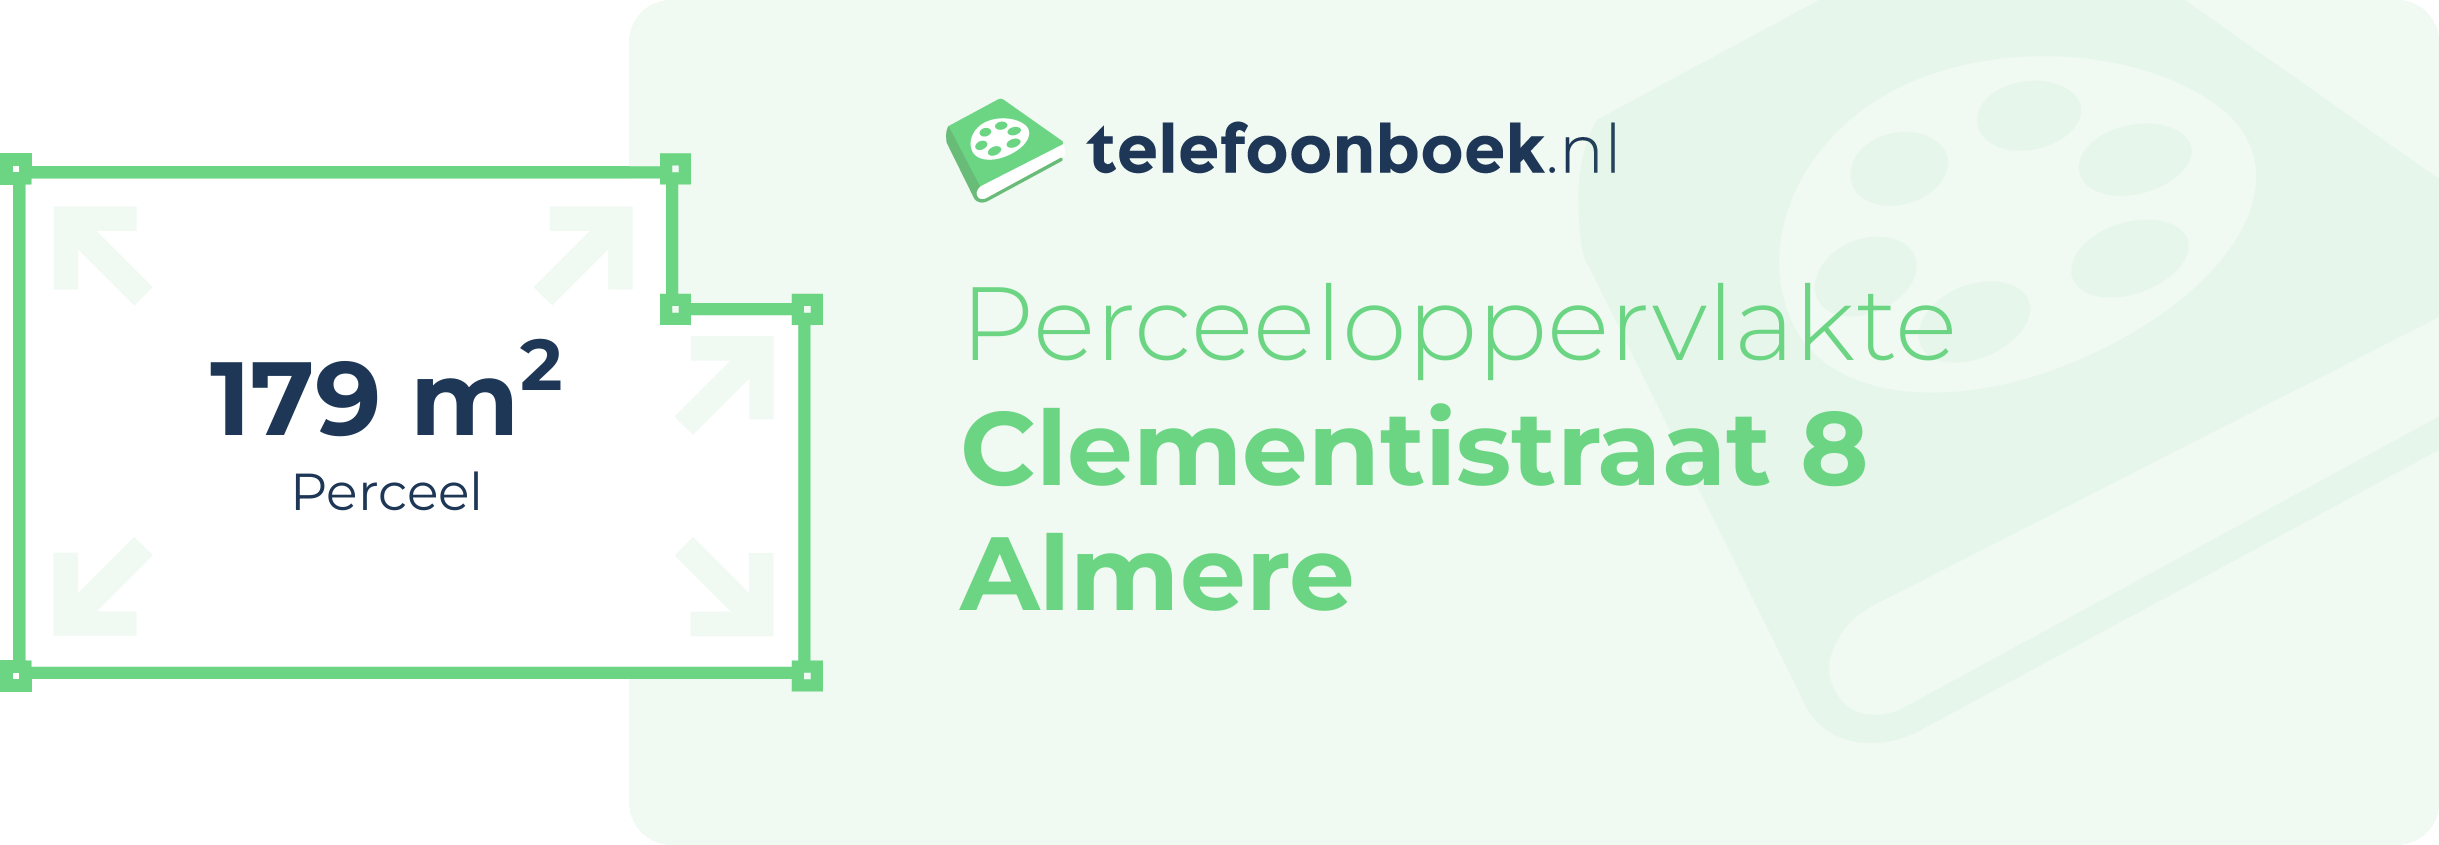 Perceeloppervlakte Clementistraat 8 Almere